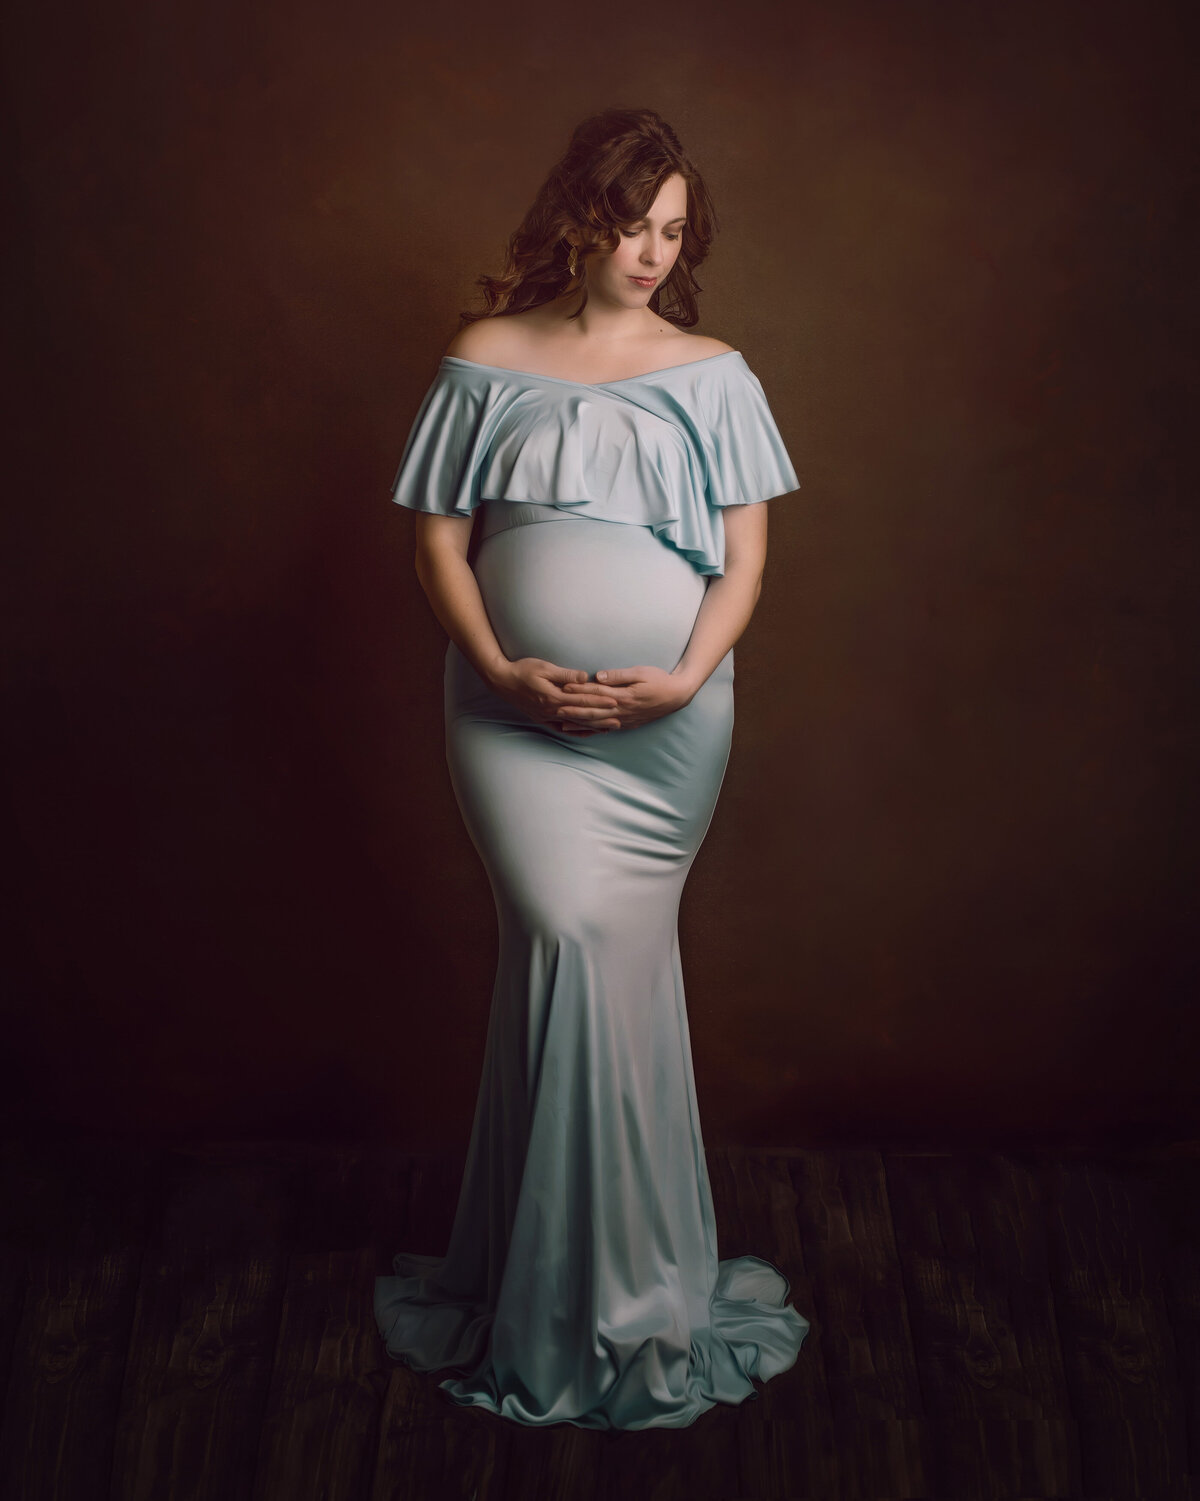 Skagit-Maternity-Photographer-0070